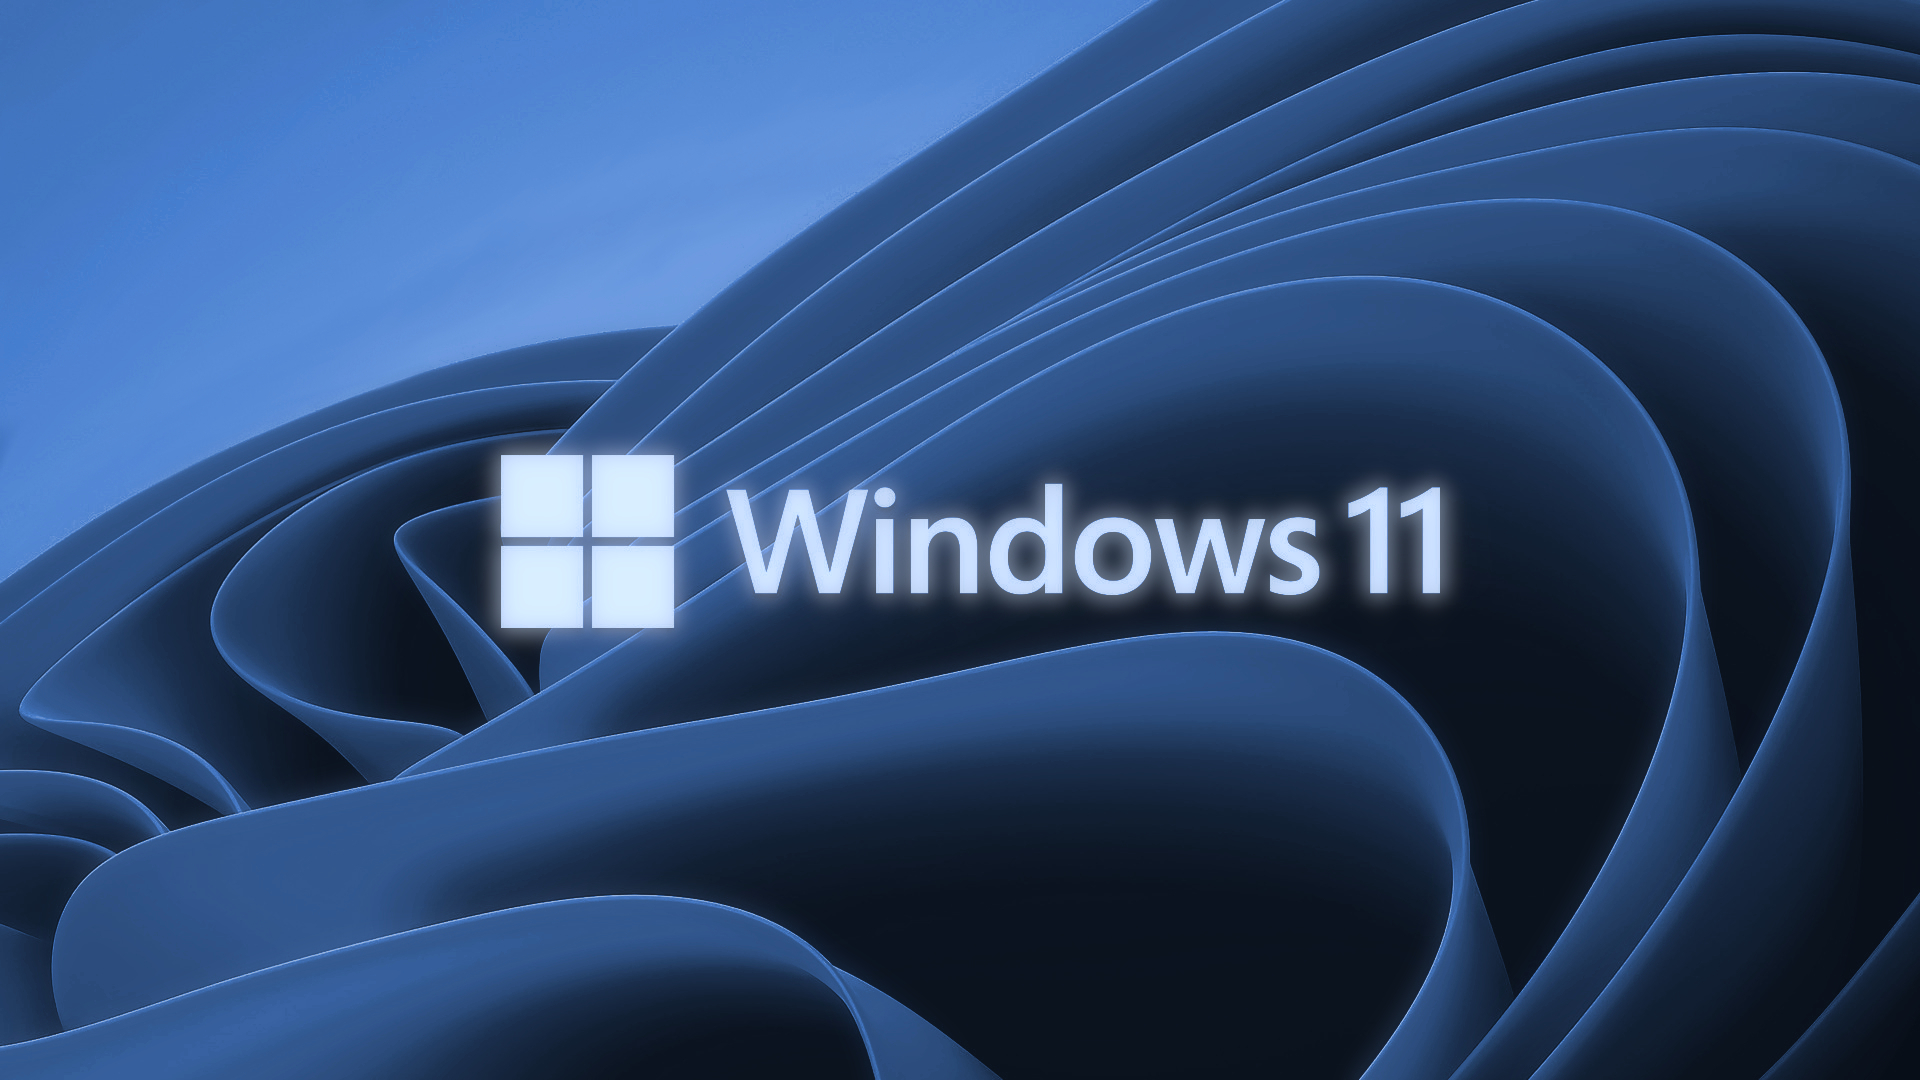 General 1920x1080 Windows 11 Microsoft operating system windows logo minimalism digital art